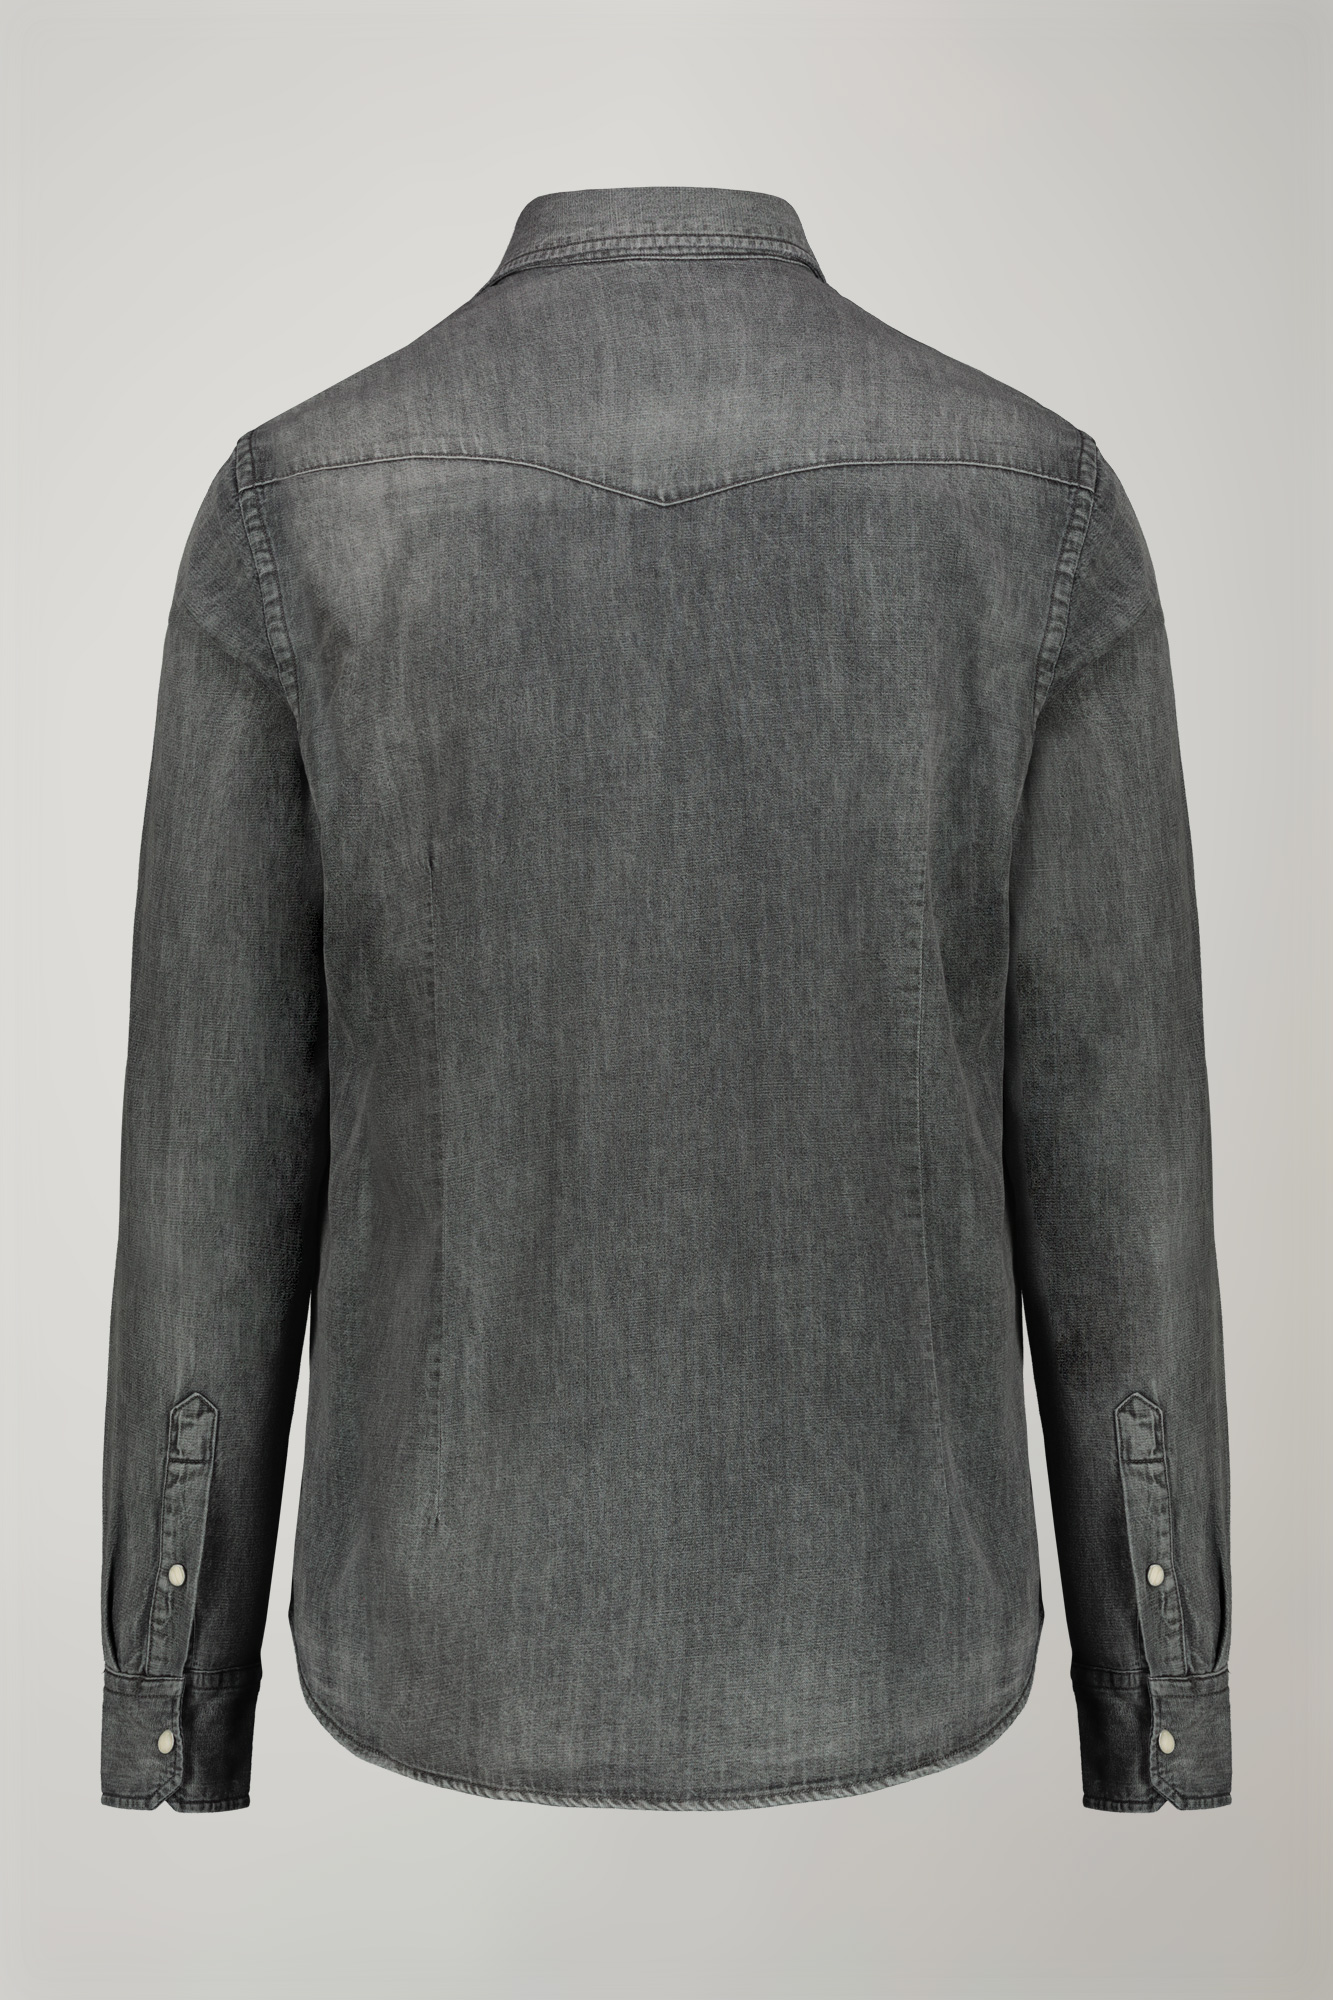 Men’s casual shirt classic collar 100% cotton denim fabric comfort fit image number null